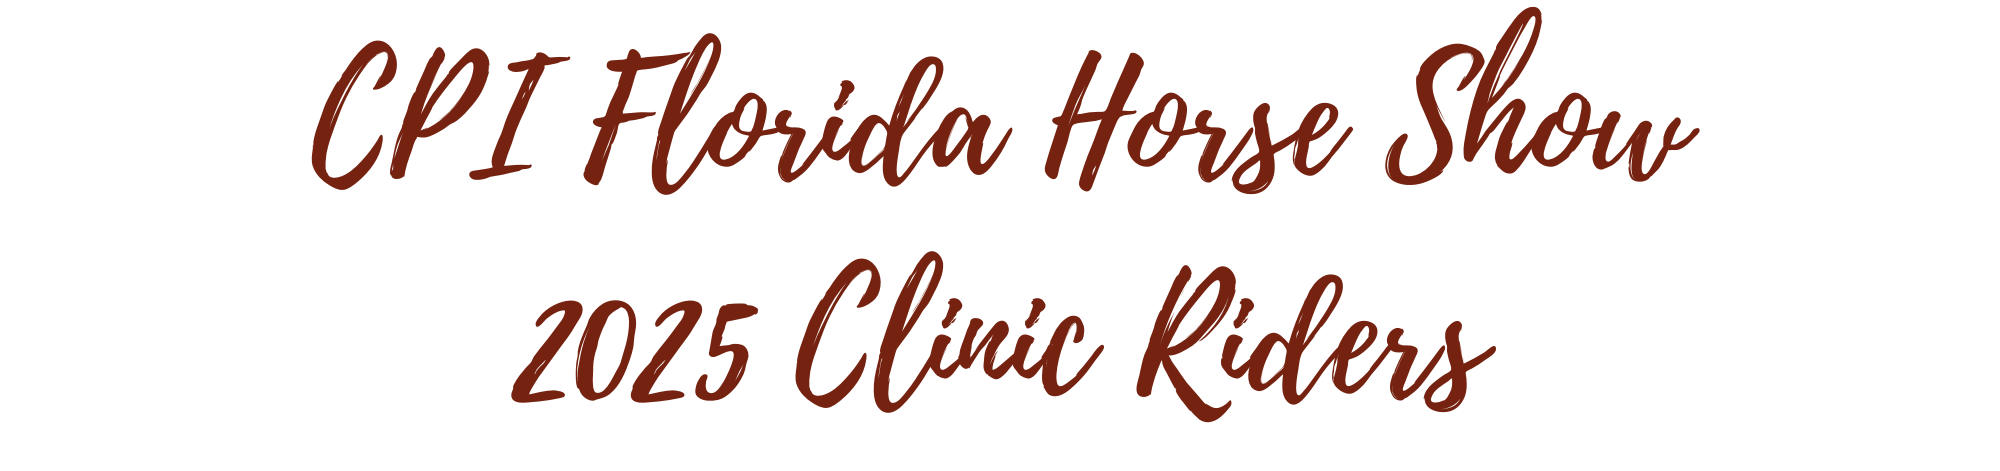 2025 Clinic Riders Website Header - 8.5 x 2